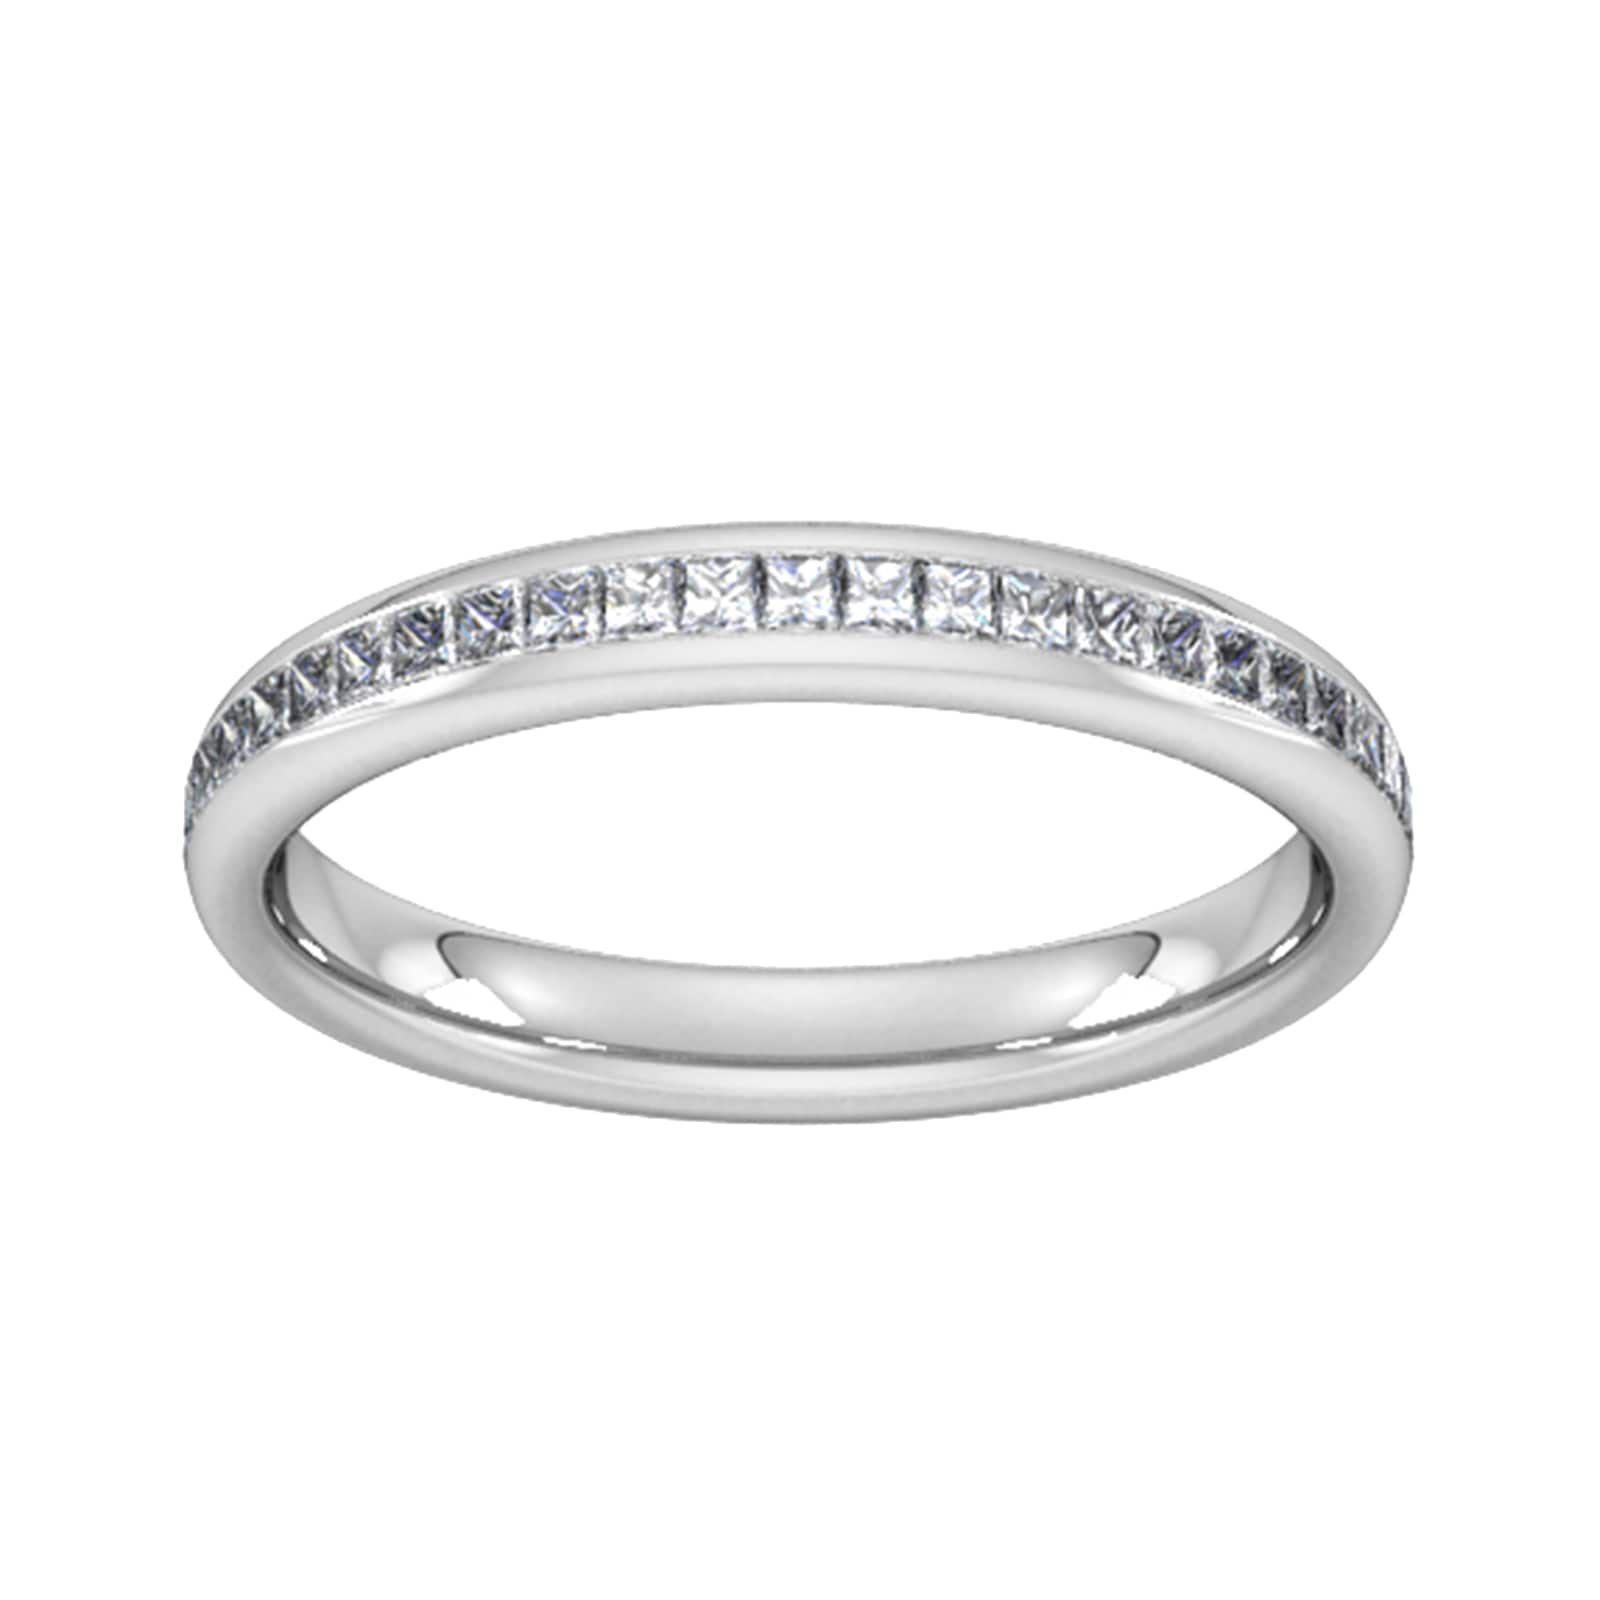 0.34 Carat Total Weight Princess Cut Channel Set Wedding Ring In 18 Carat White Gold - Ring Size K